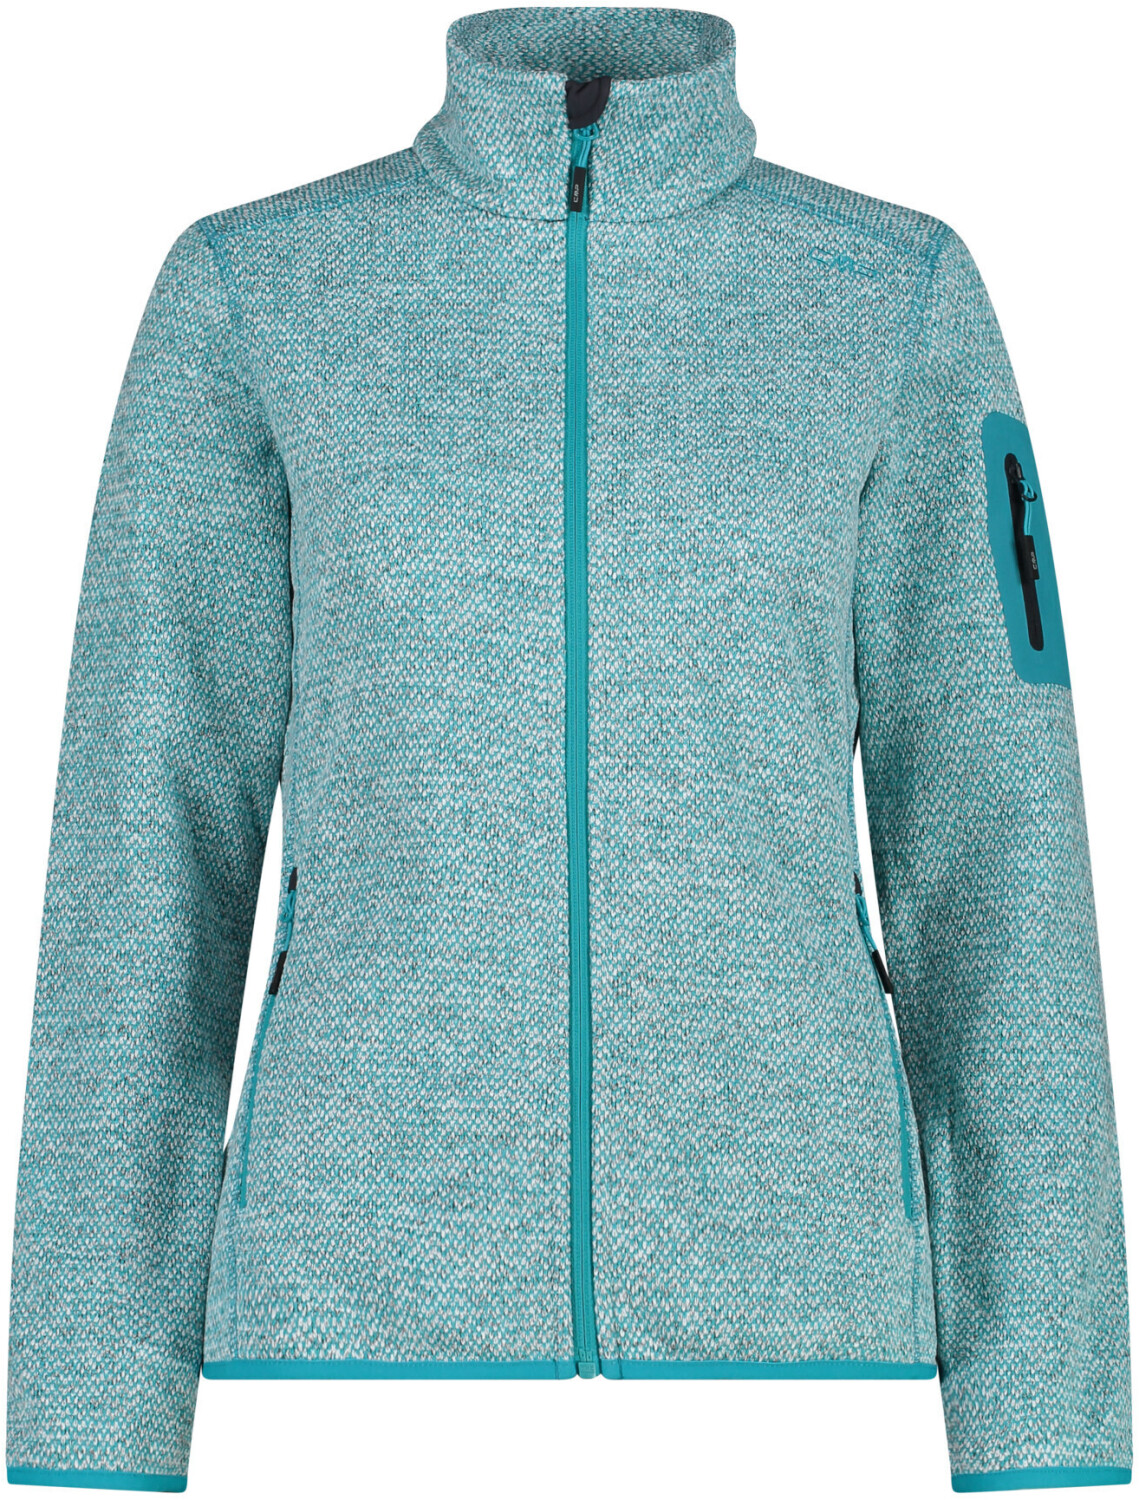 Buy CMP Woman Fleece Jacket (3H14746) lagoon/bianco from £28.99 (Today) –  Best Deals on